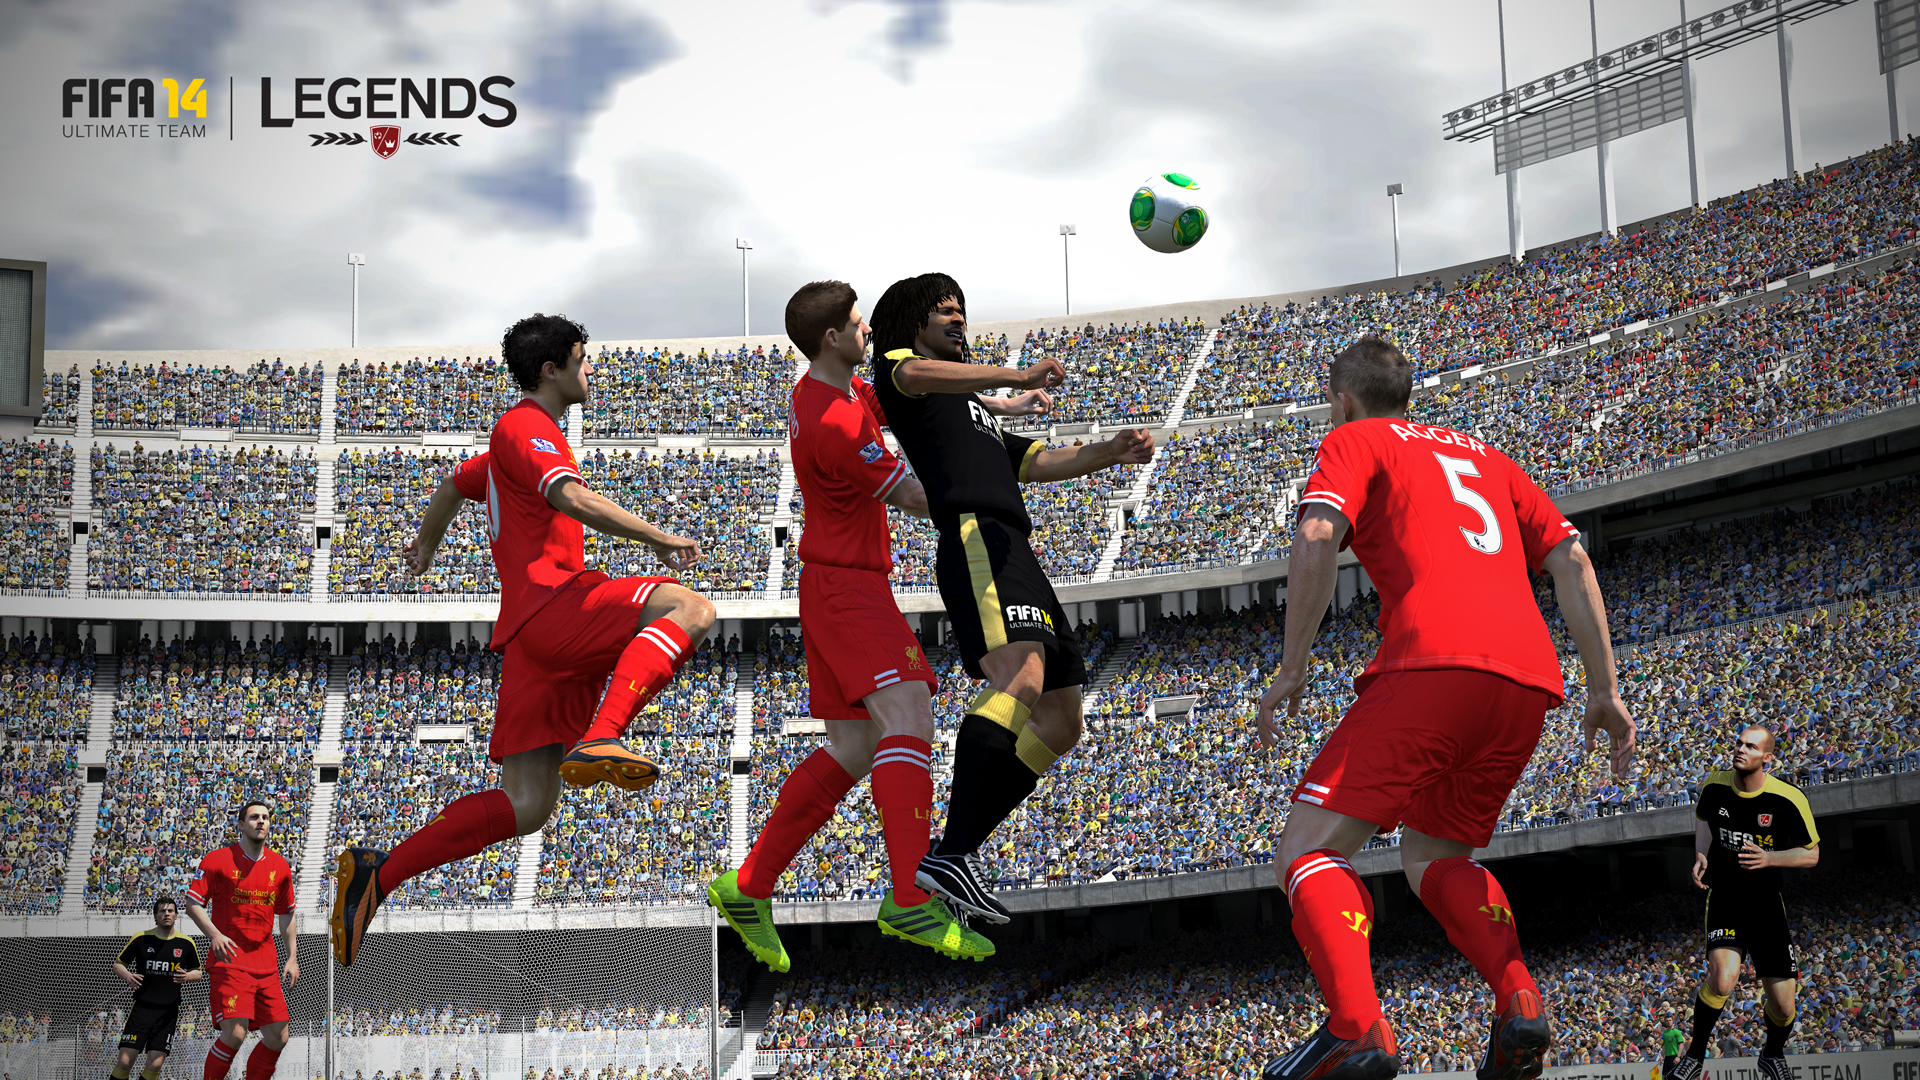 Fifa игры через. FIFA 14 Ultimate Team. Legends FIFA 14. ФИФА 14 фото. ФИФА 14 Скриншоты.